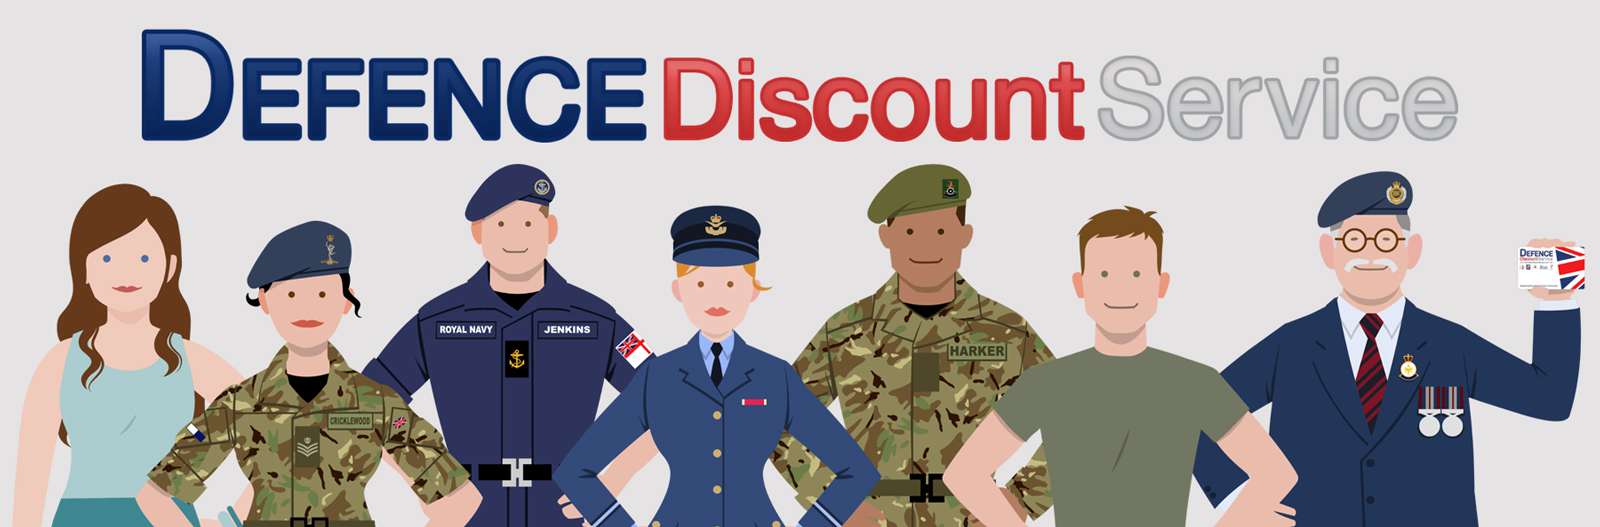 Defence Discount Service Header Image